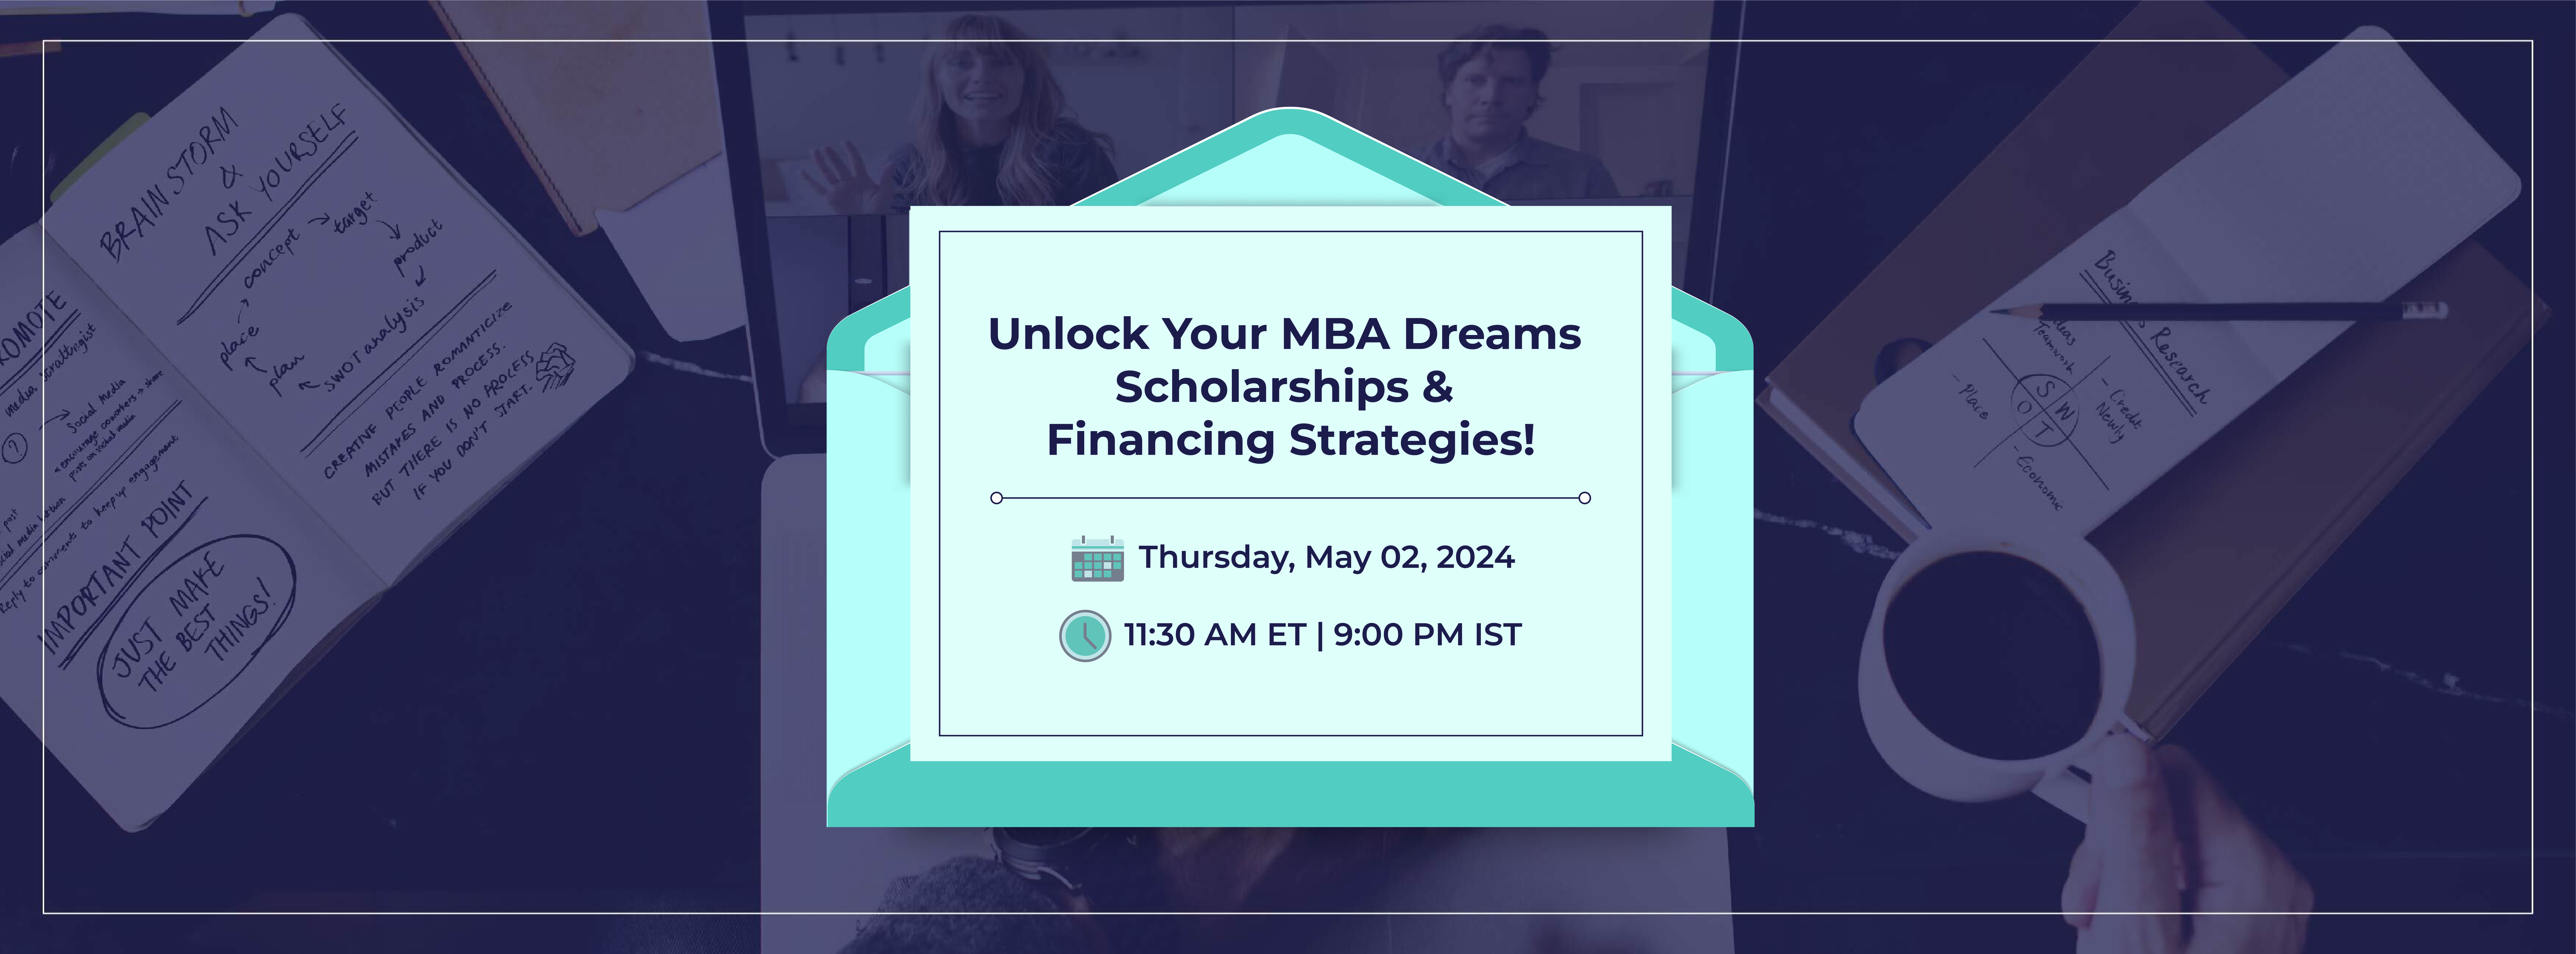 Unlock Your MBA Dreams: Scholarships & Financing Strategies!